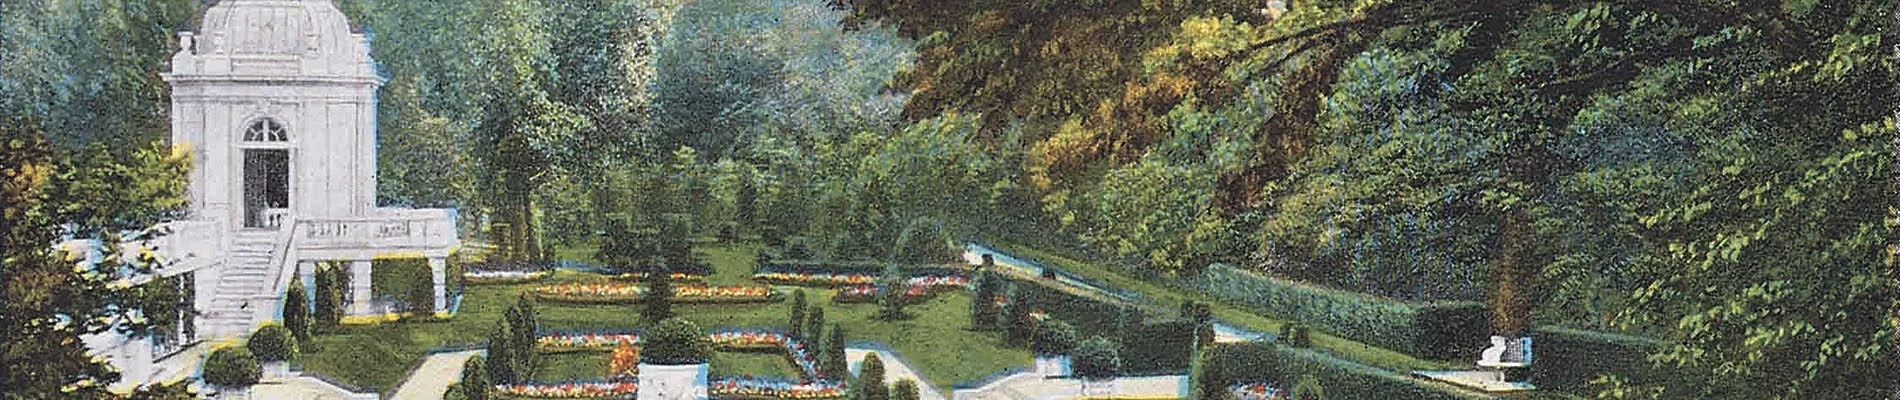 Elms sunken garden historic postcard